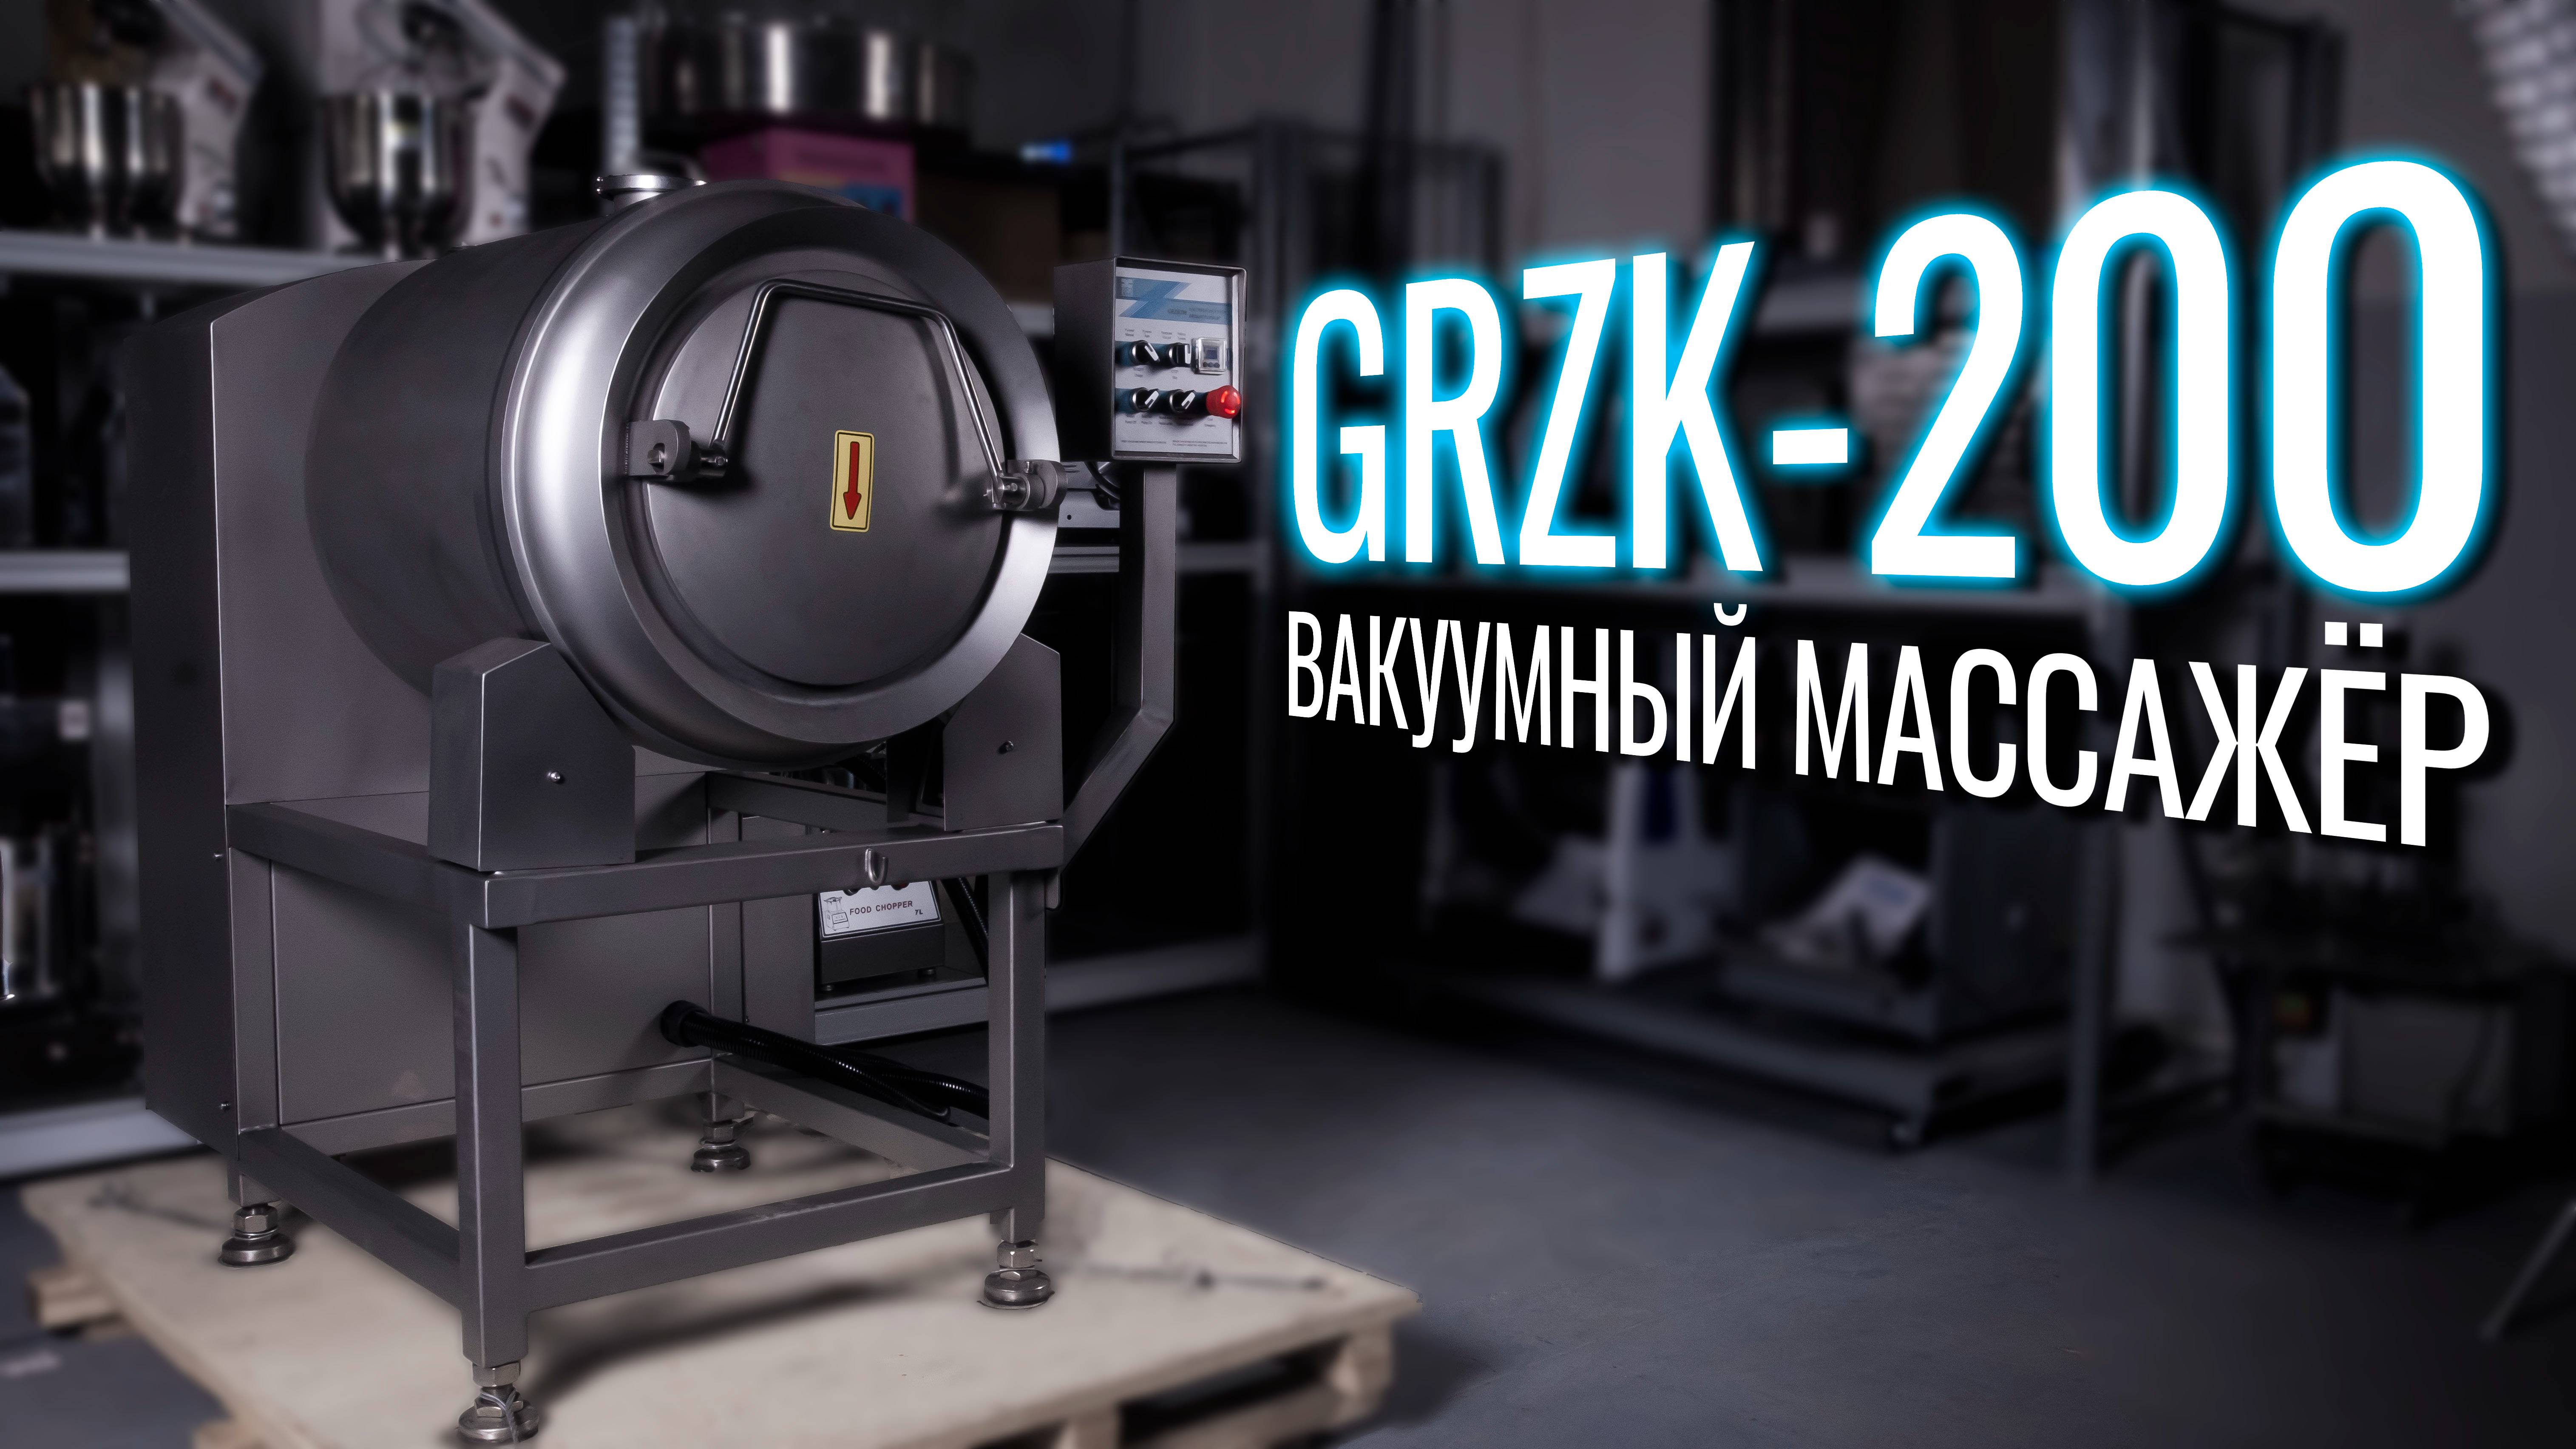 GRZK-200 Обзор вакуумного массажёра!